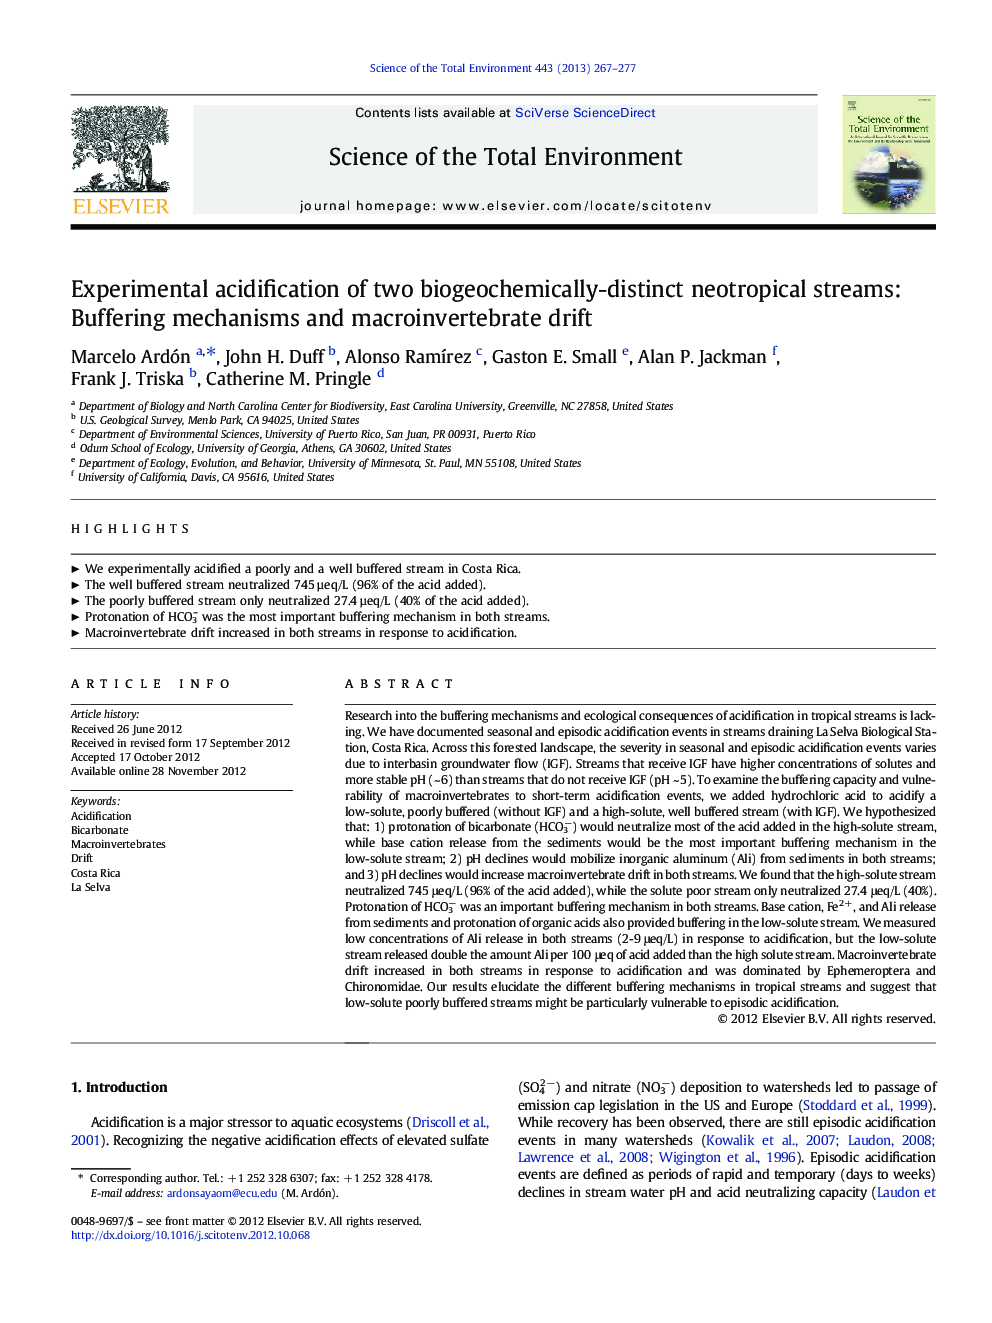 Experimental acidification of two biogeochemically-distinct neotropical streams: Buffering mechanisms and macroinvertebrate drift